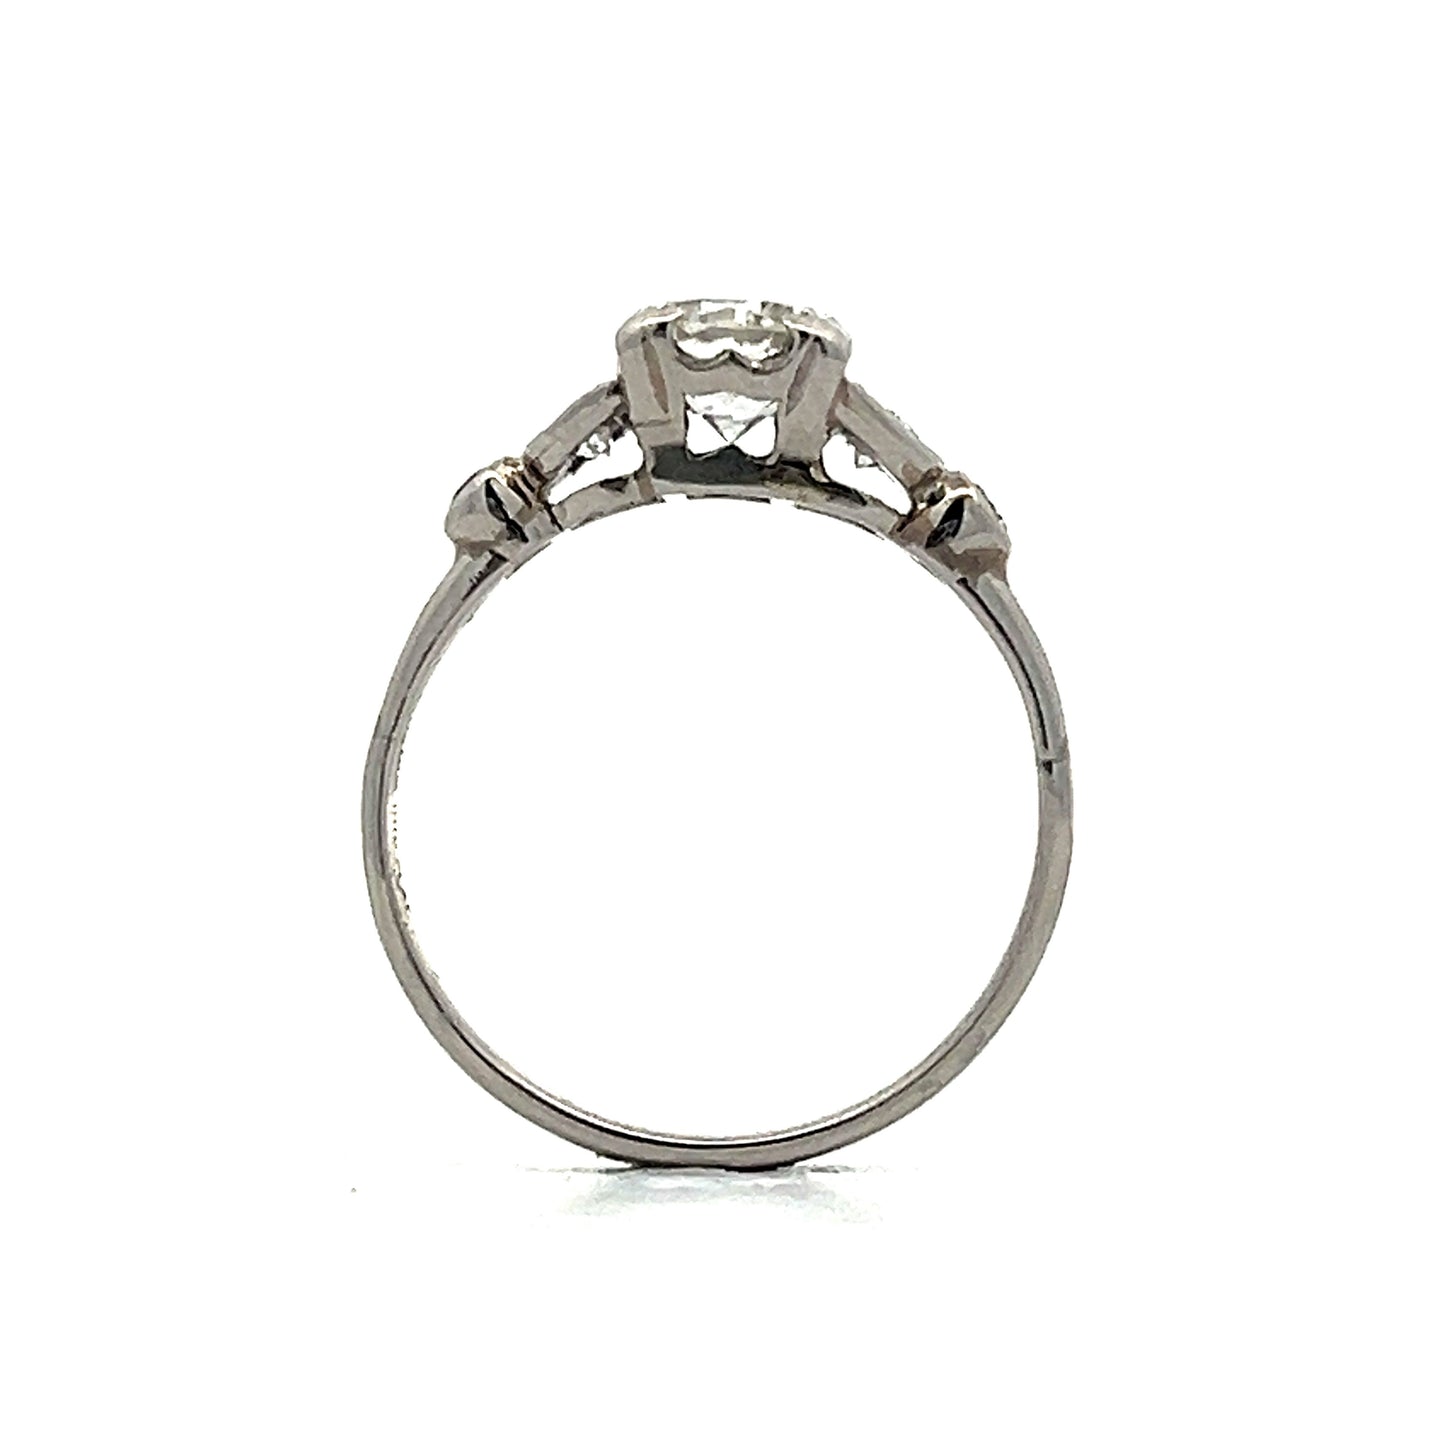 .85 Art Deco Transitional Diamond Engagement Ring in Platinum